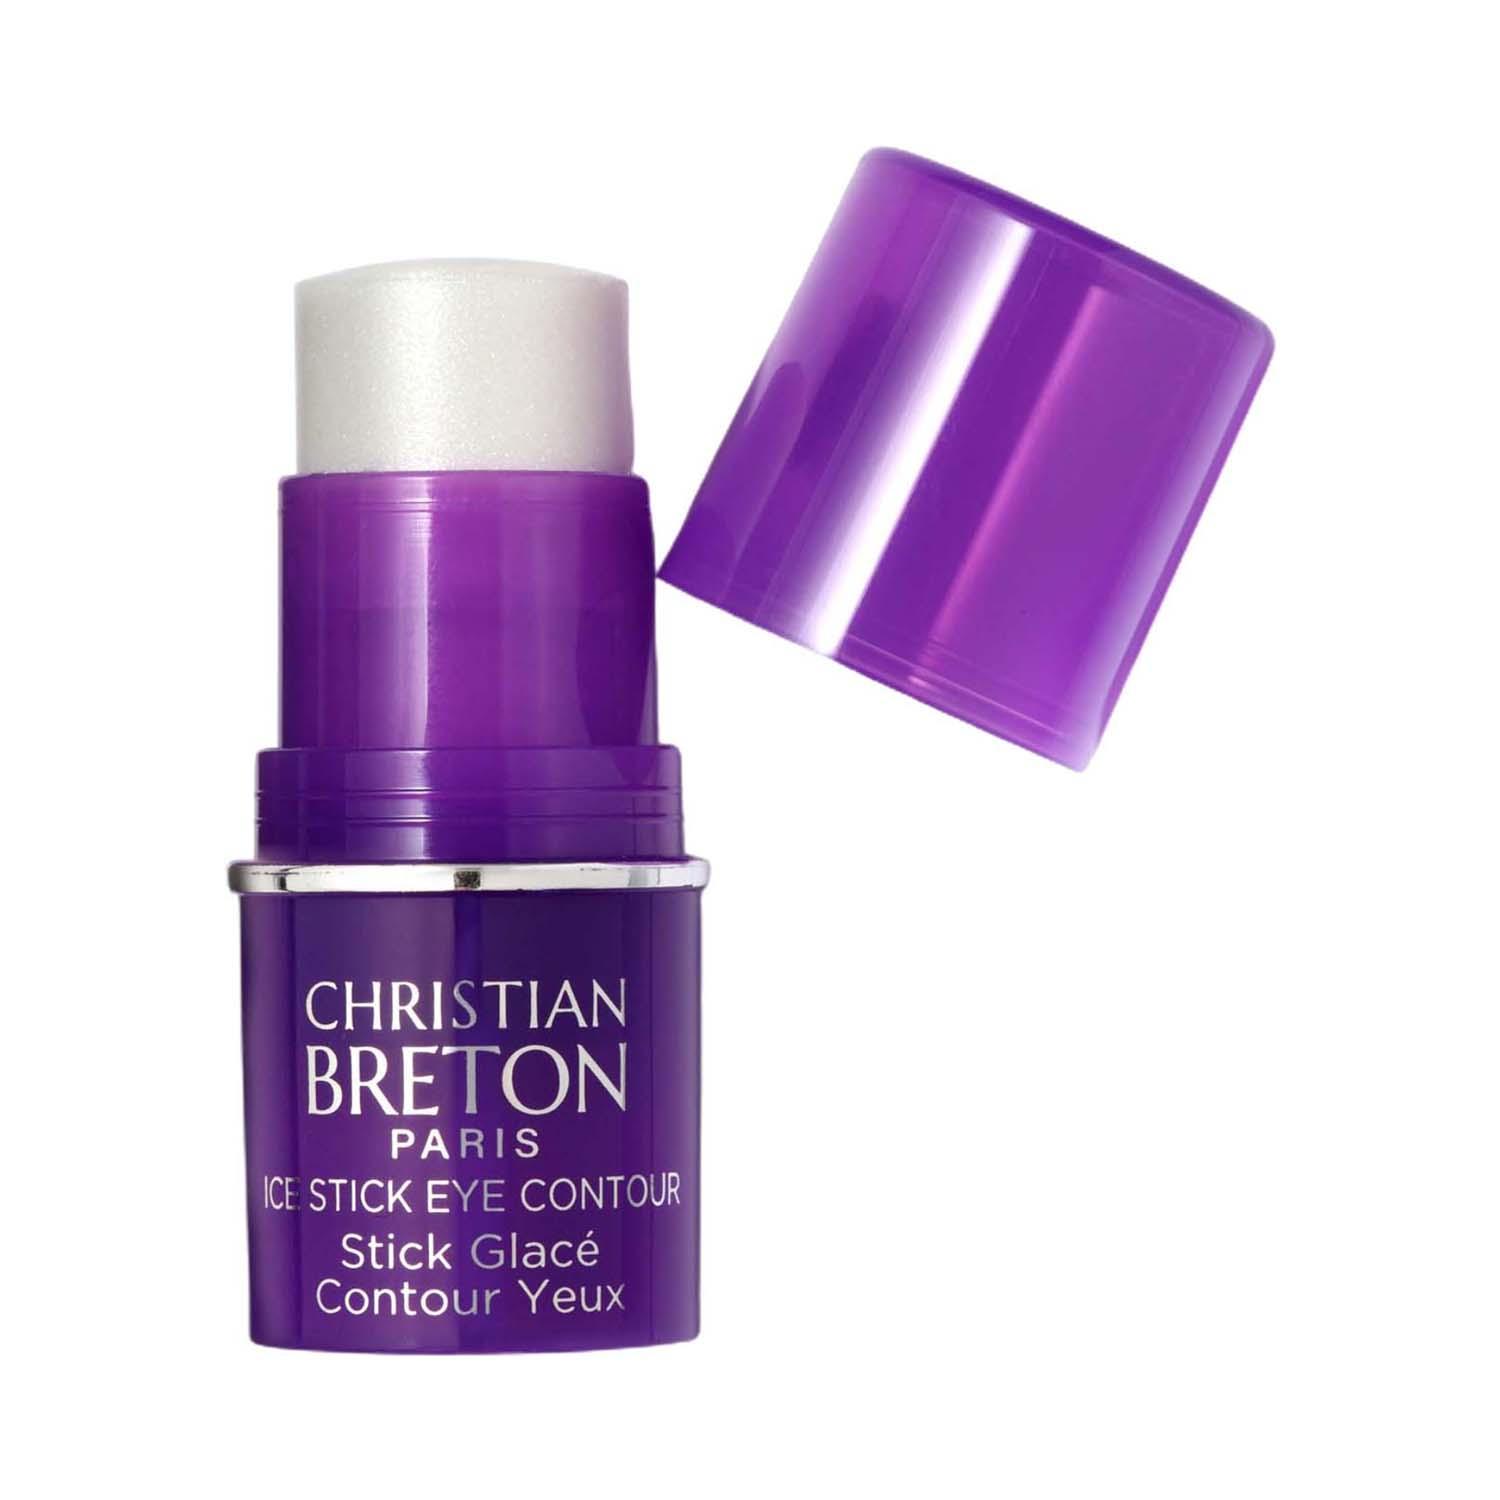 Christian Breton Ice Stick Eye Contour (3 g)